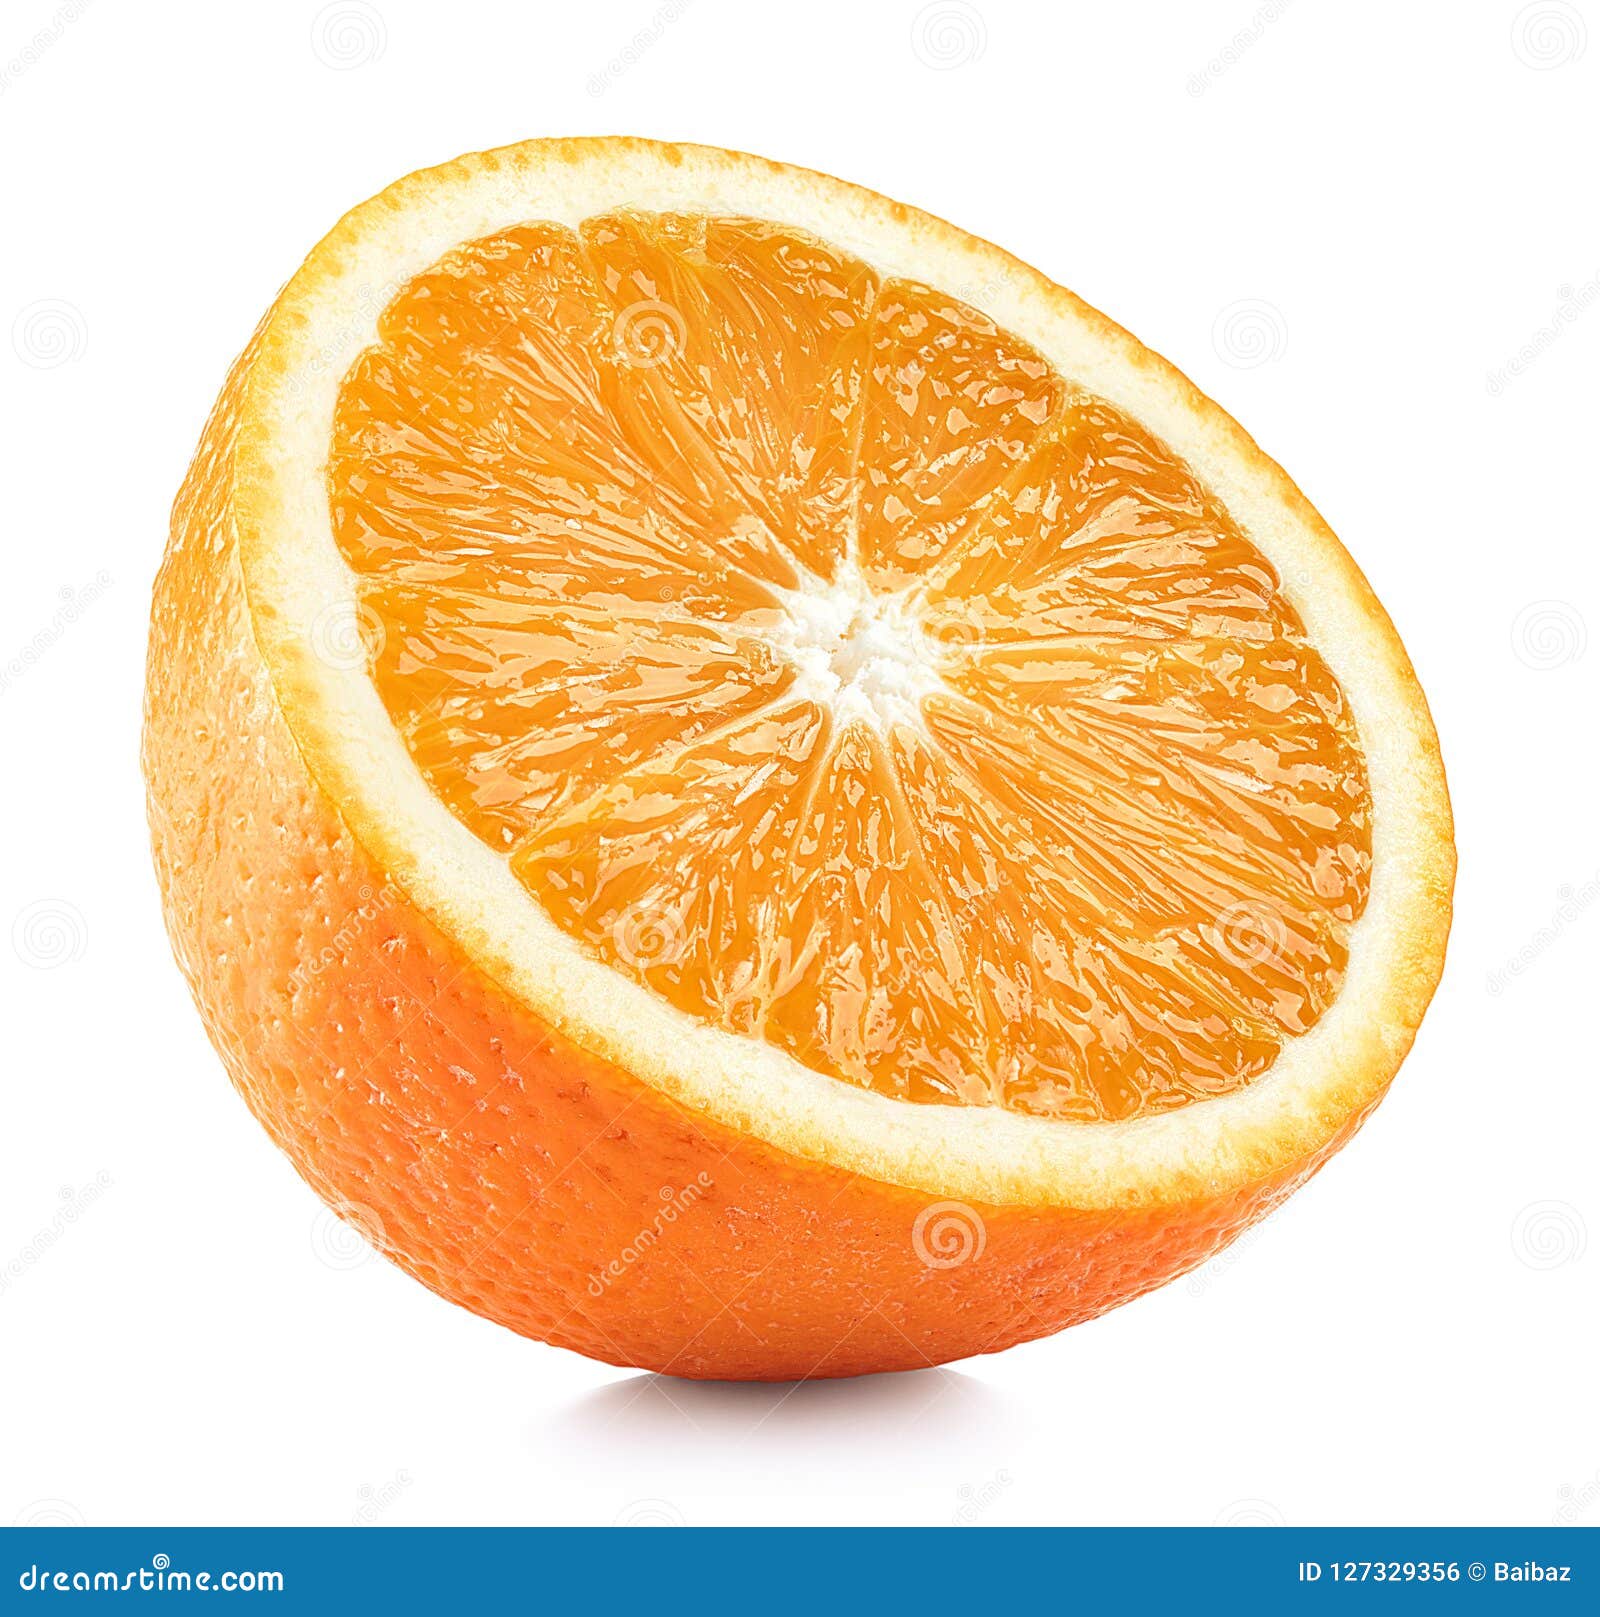 half of perfectly retouched orange fruit